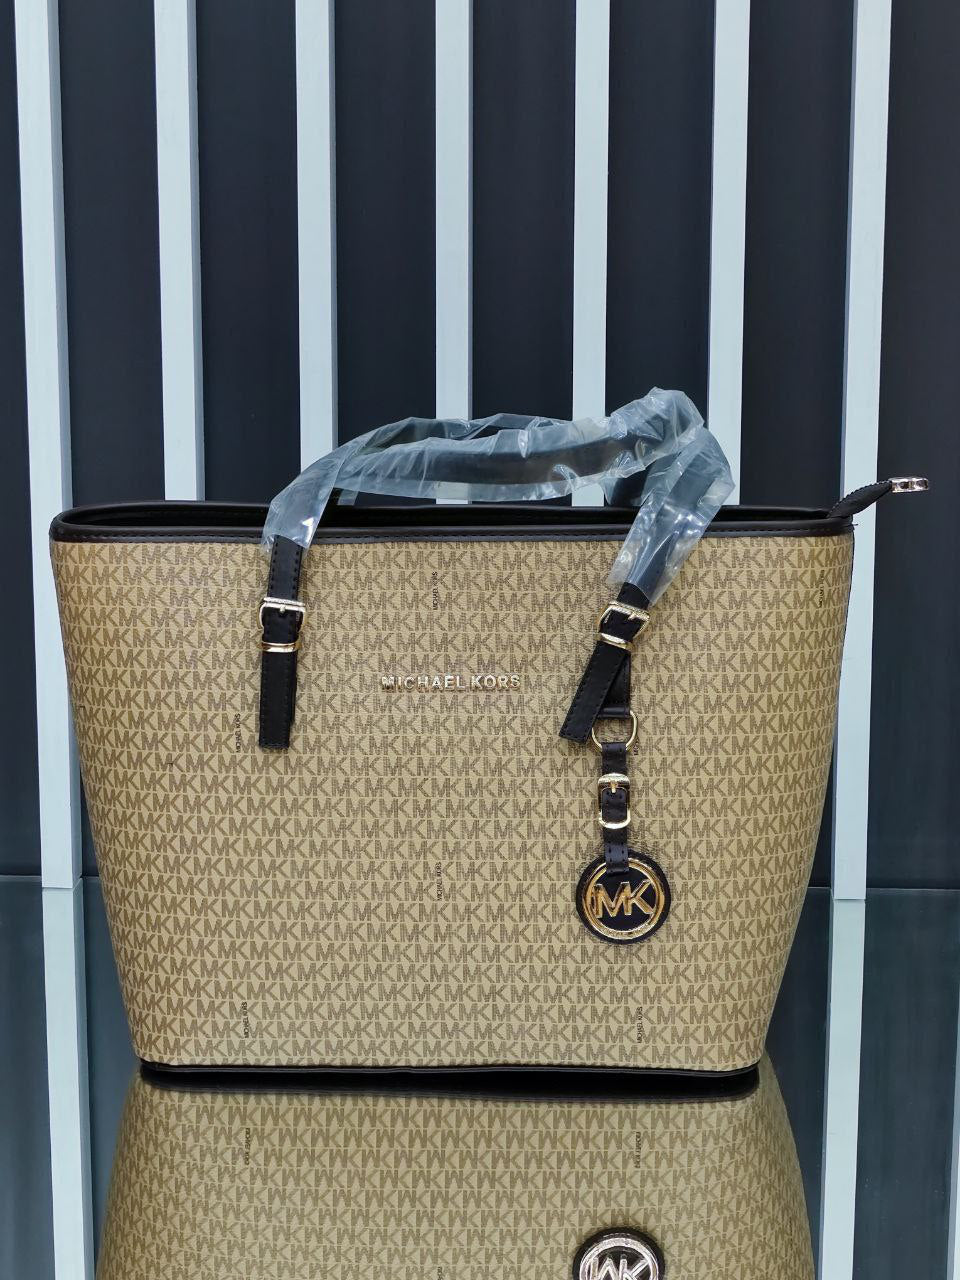 Michael Kors Rich Women Style Handbag